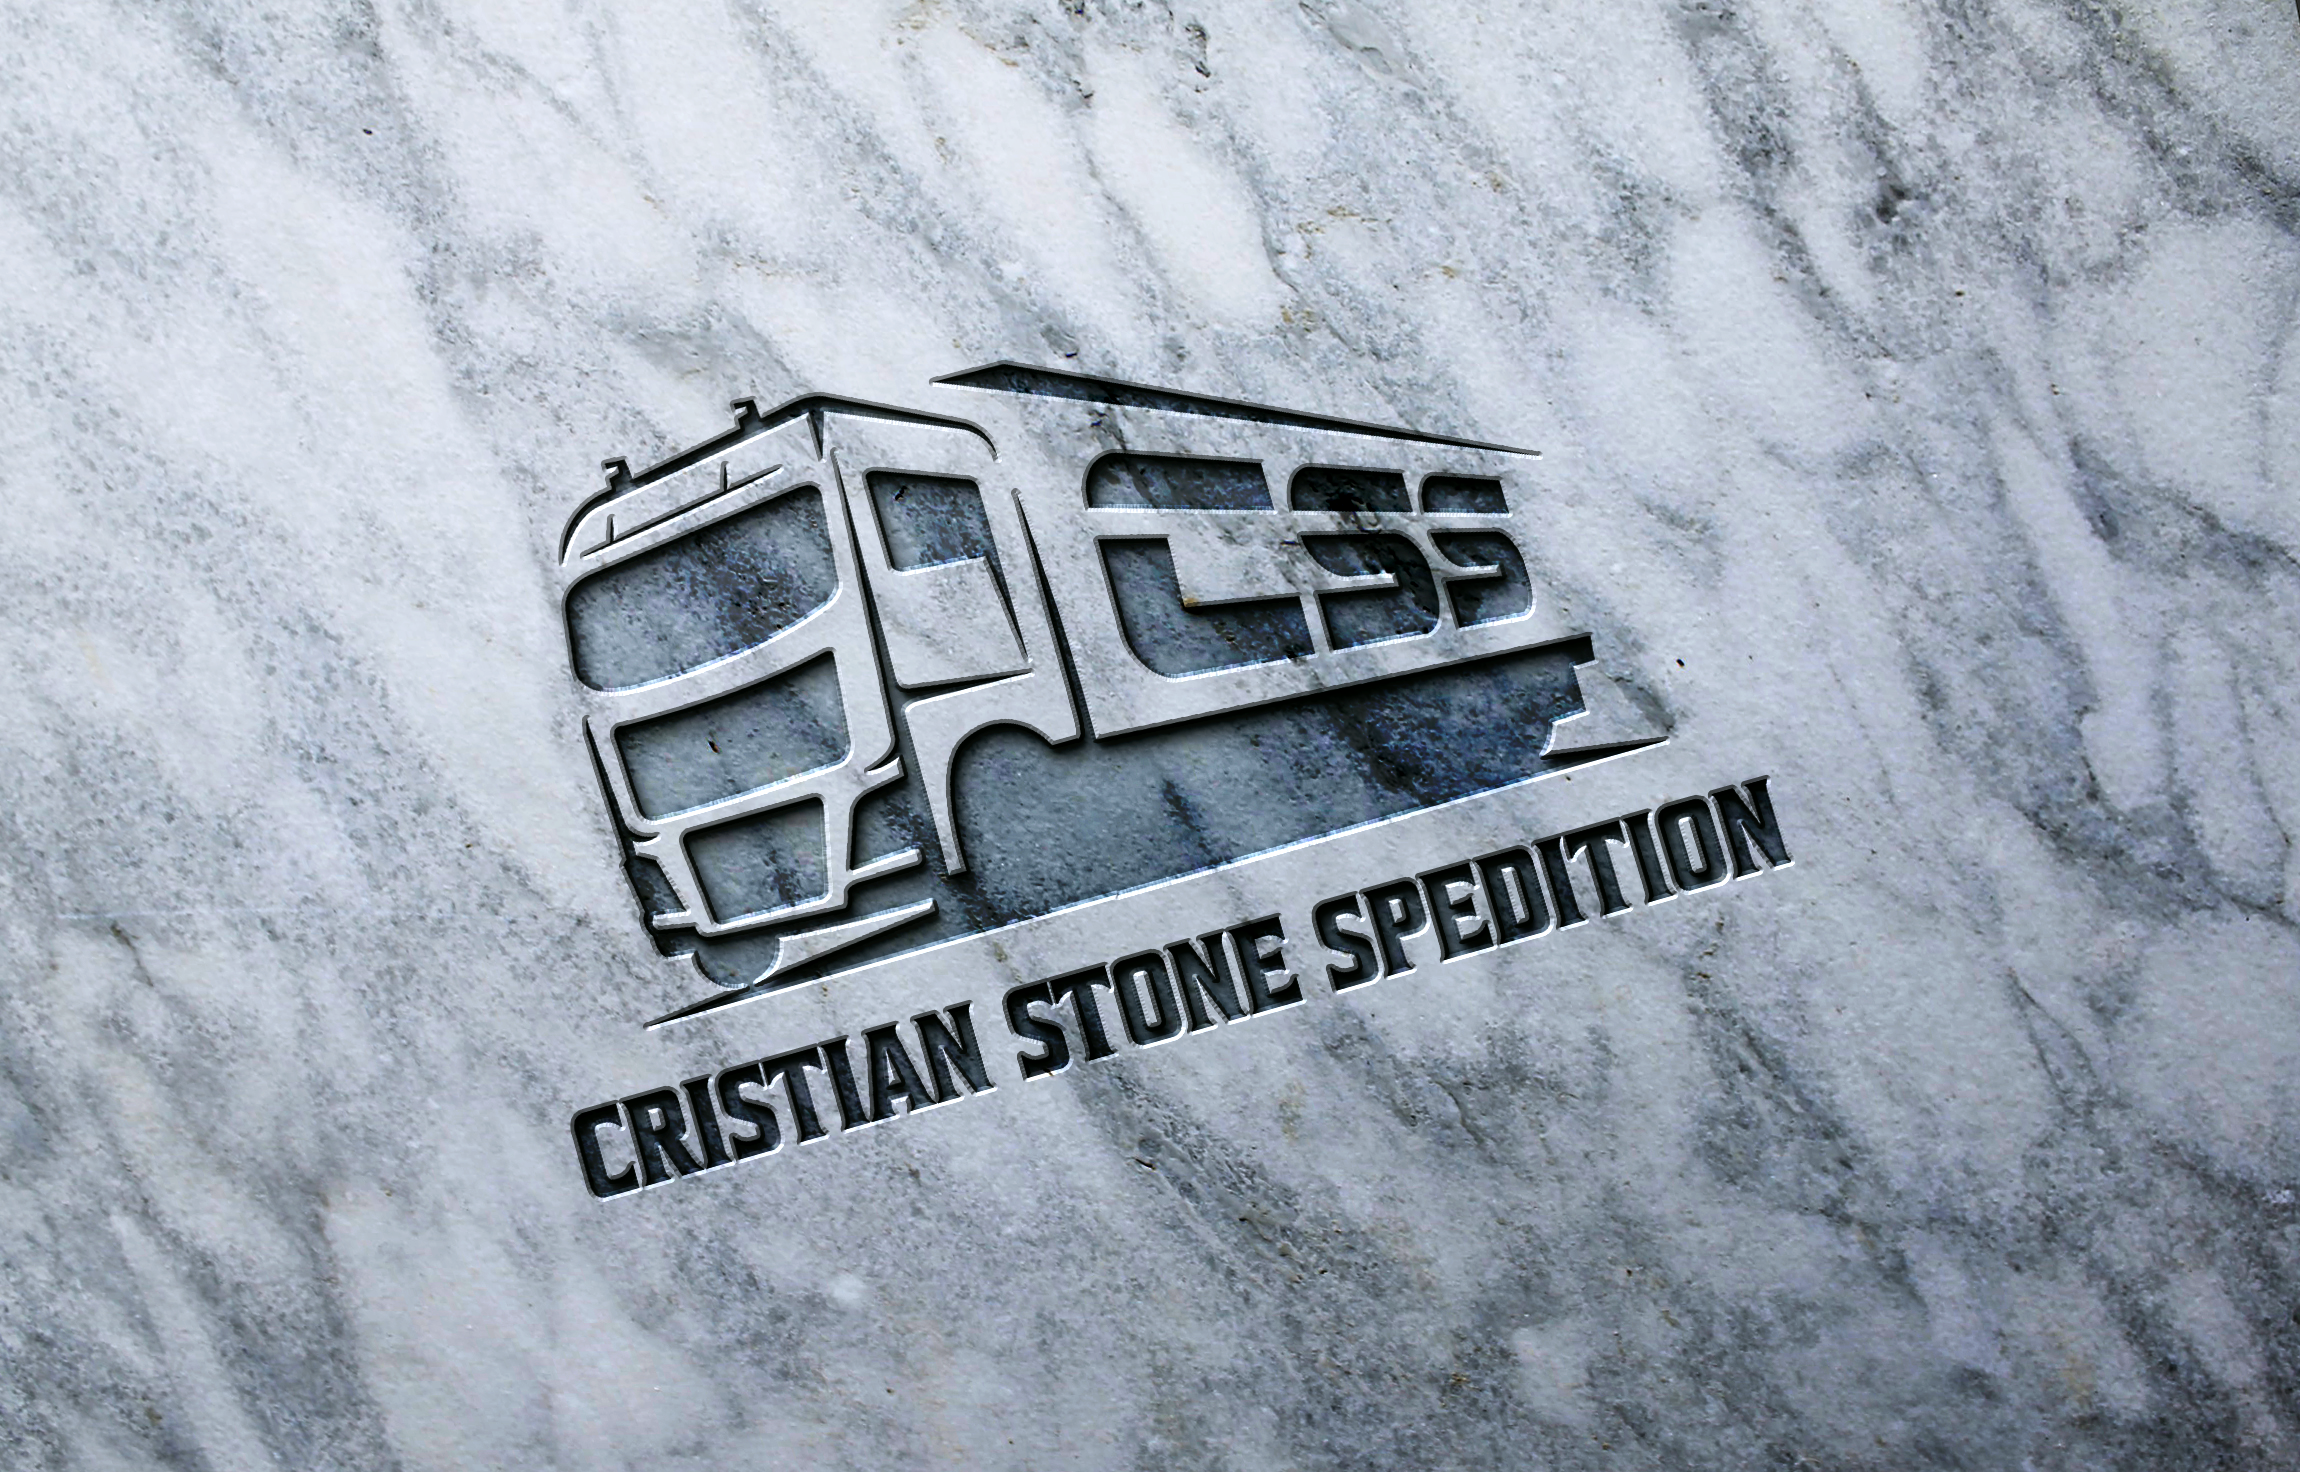 Stone Transport Spedition Company Logo Template